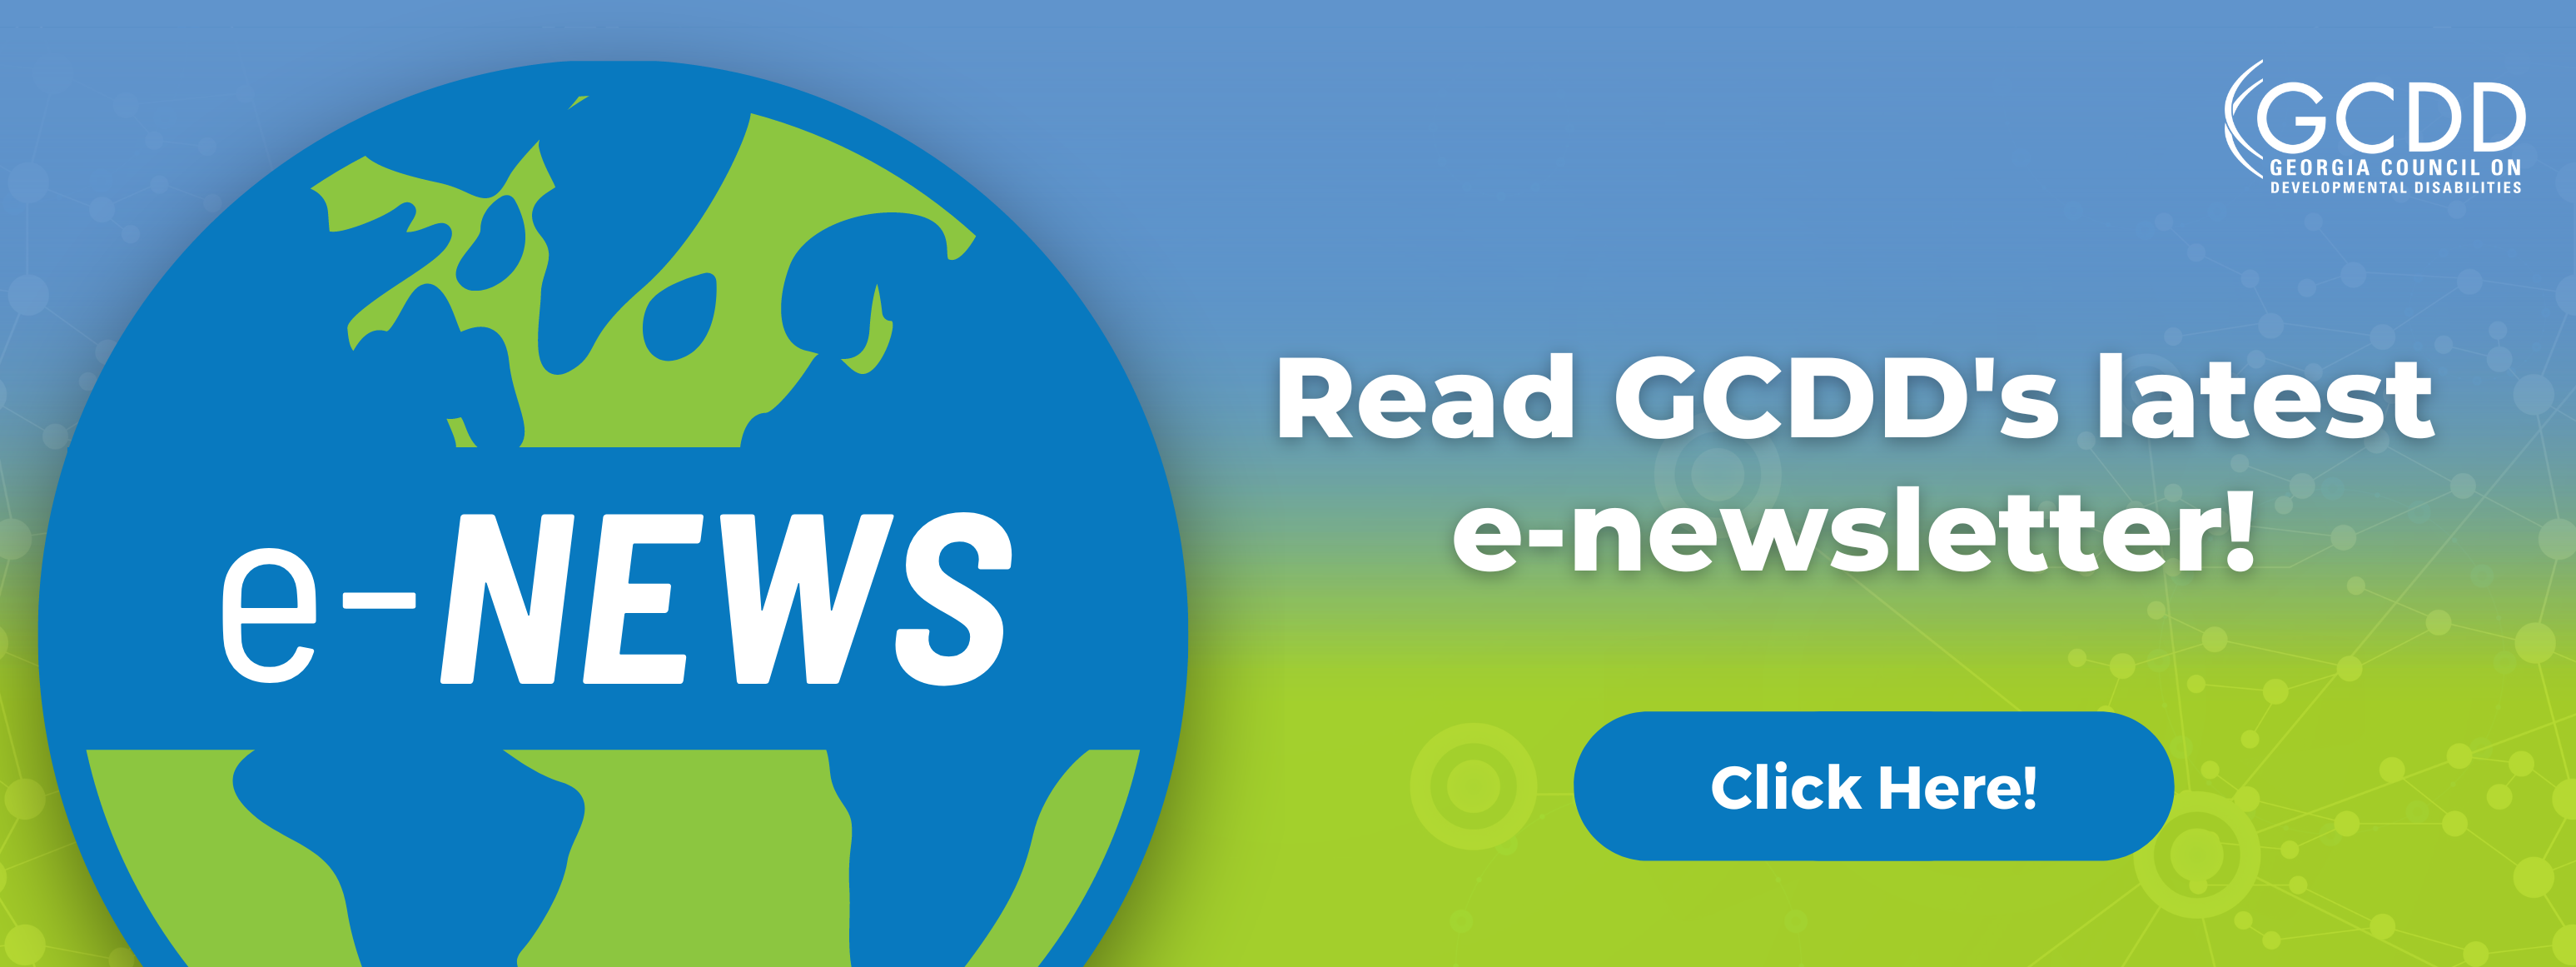 Read GCDD's latest e-newsletter!